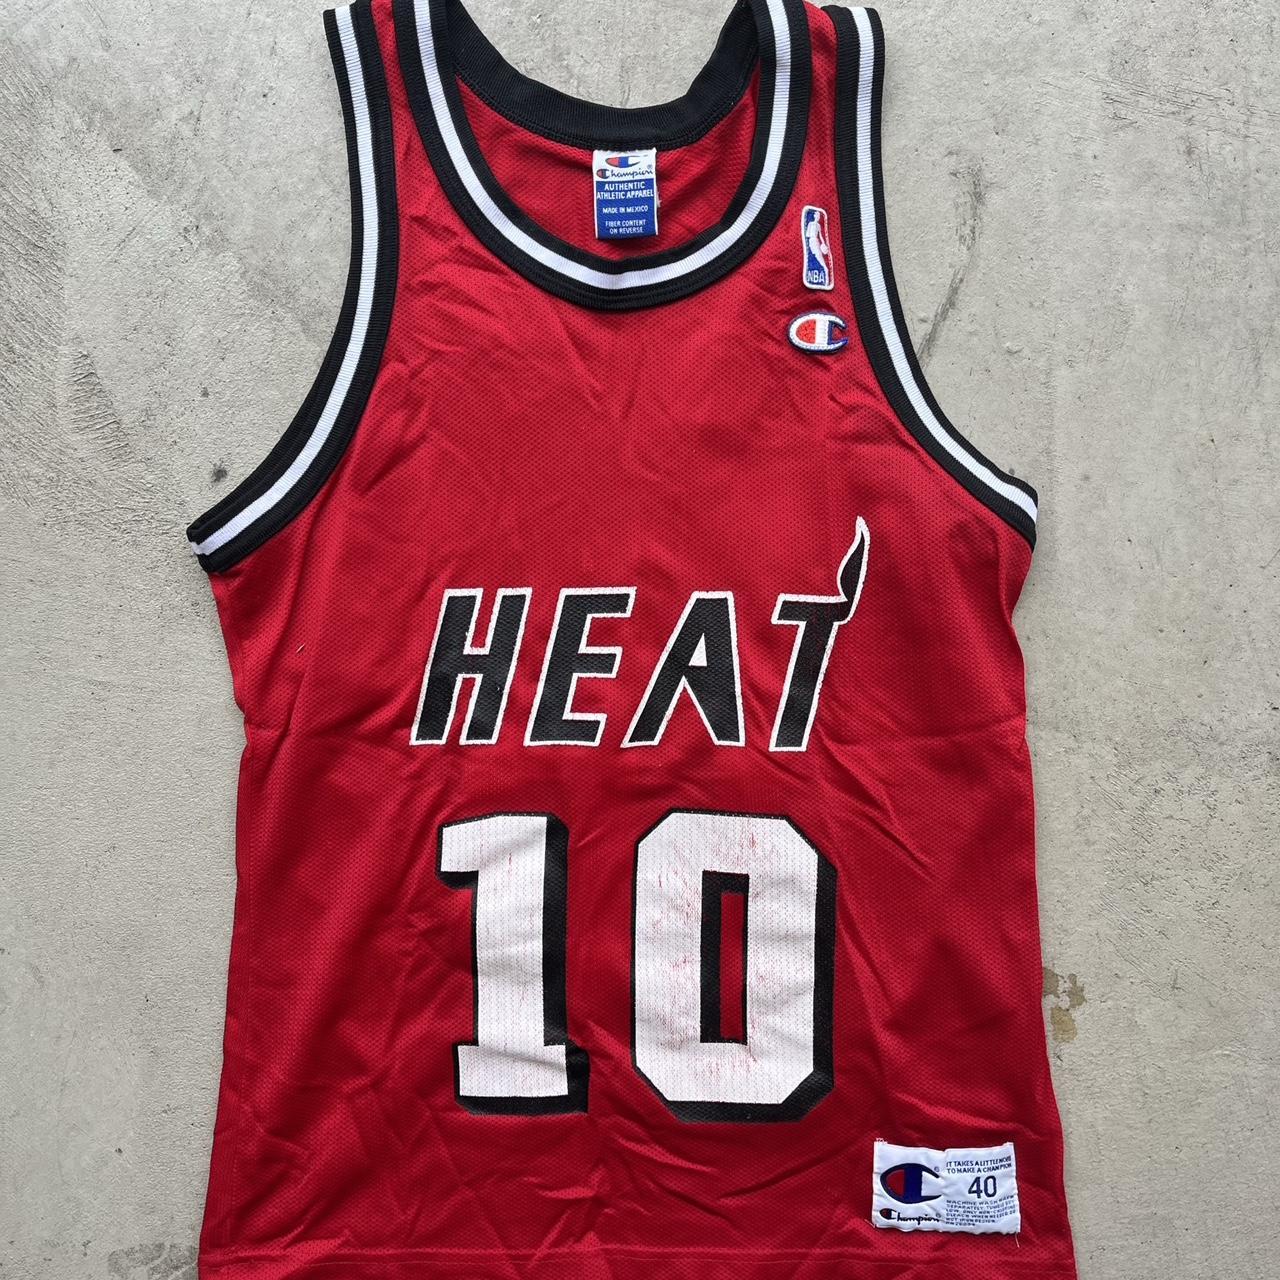 vintage heat jersey